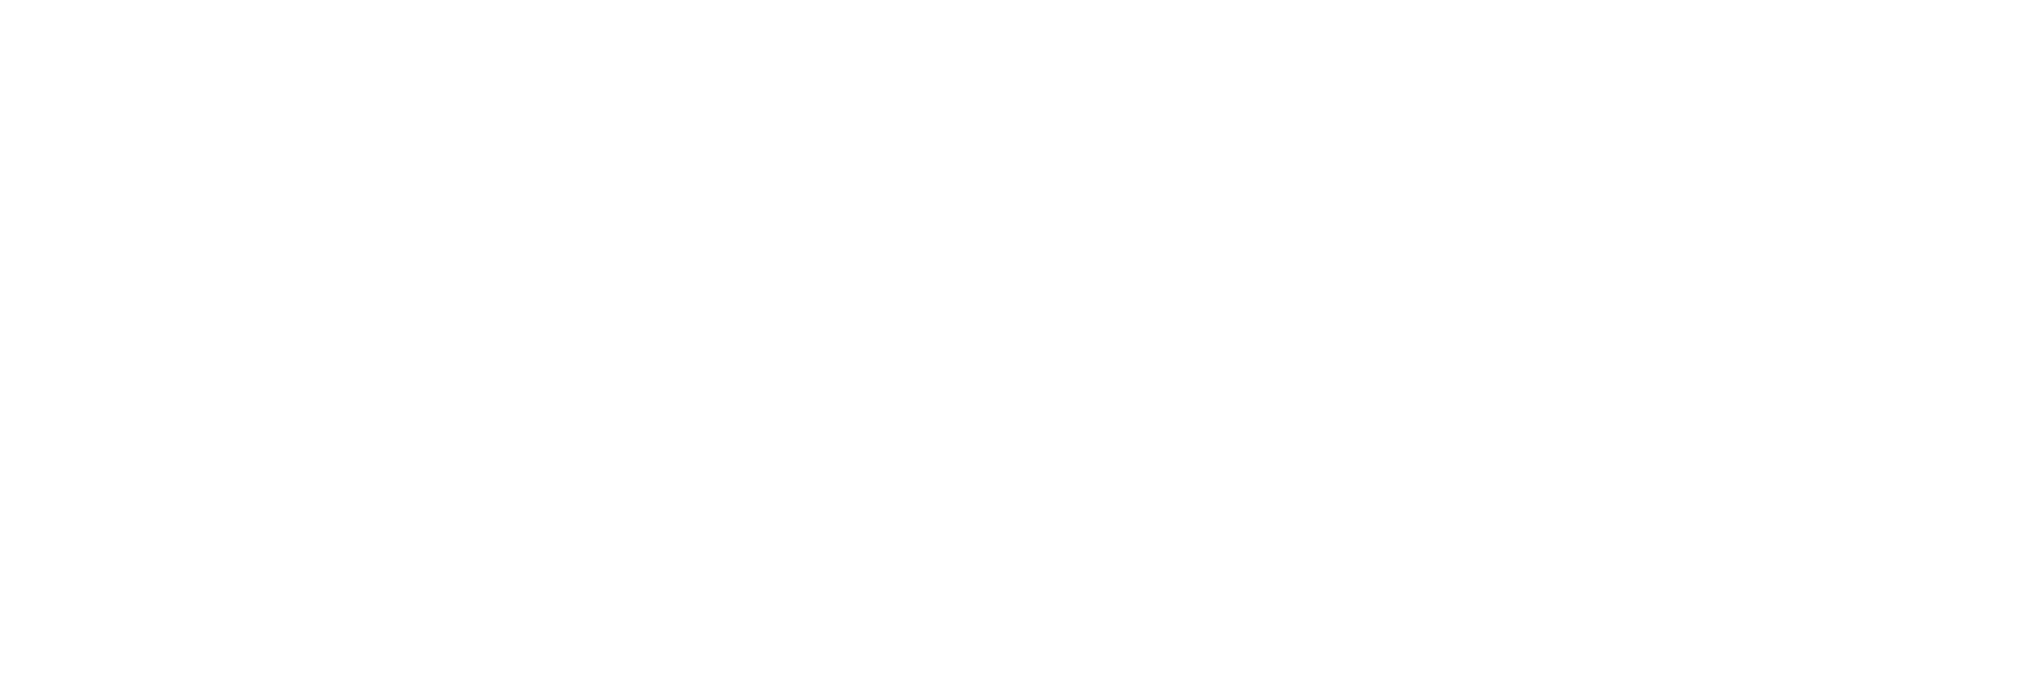 Jellyfish Community